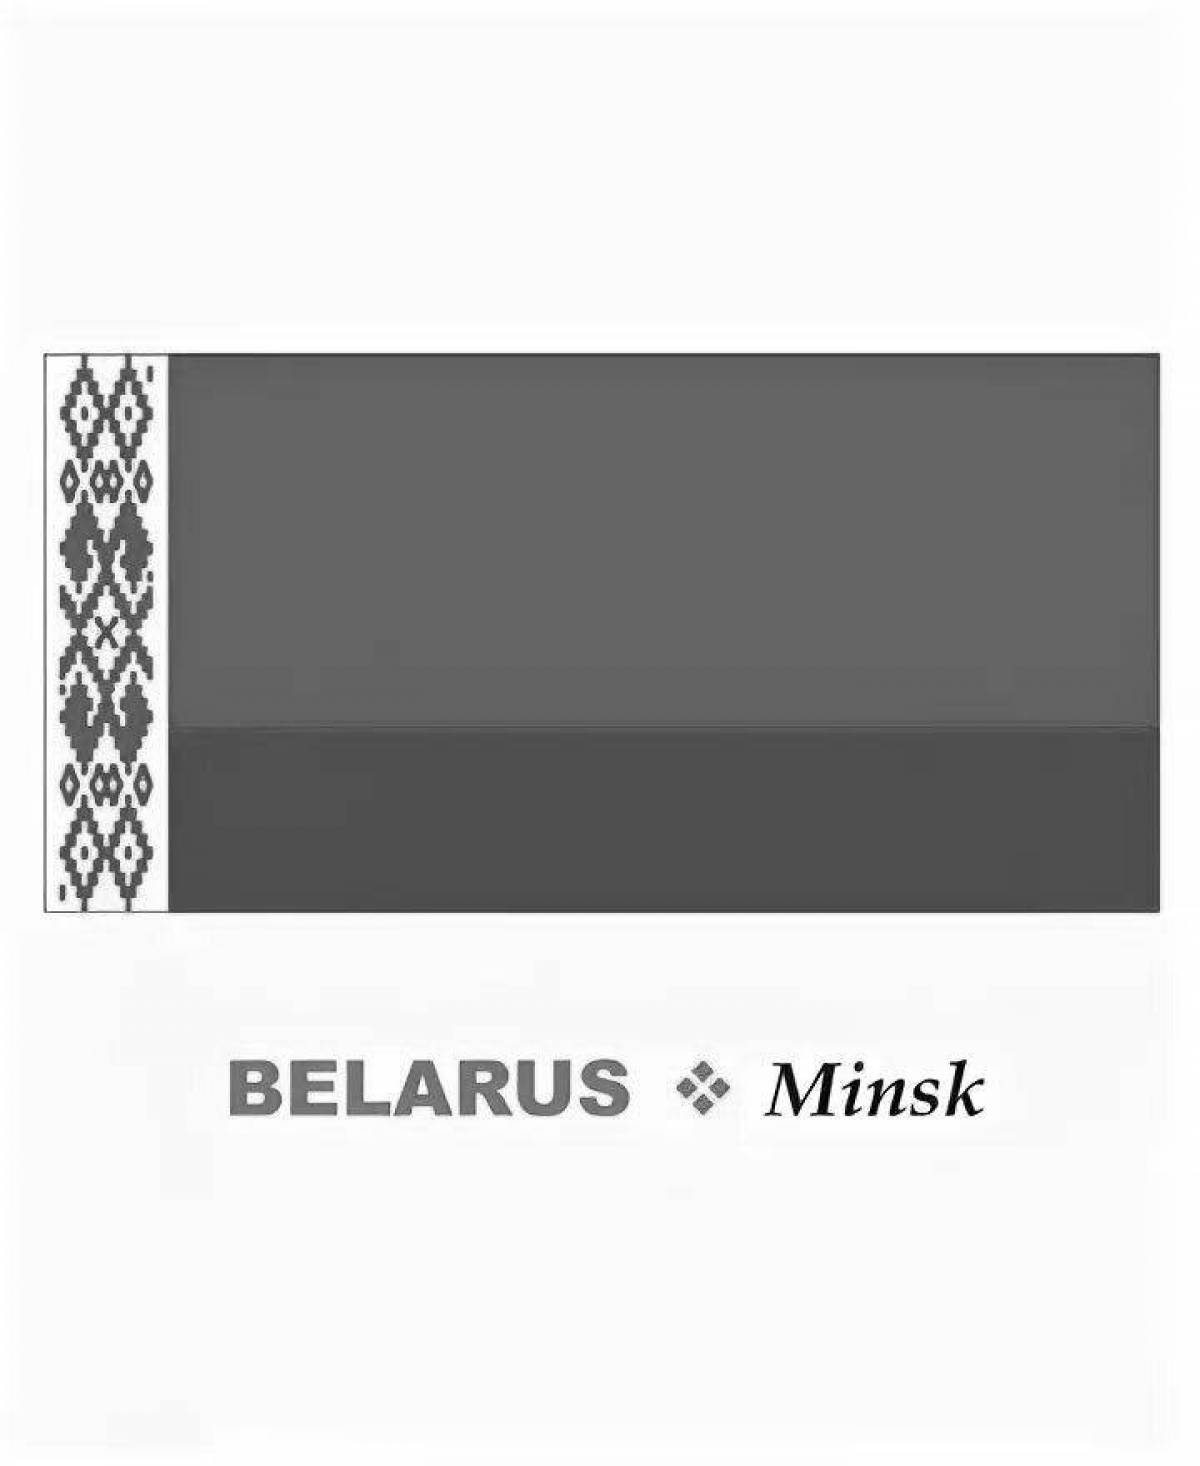 Glorious flag of belarus for juniors